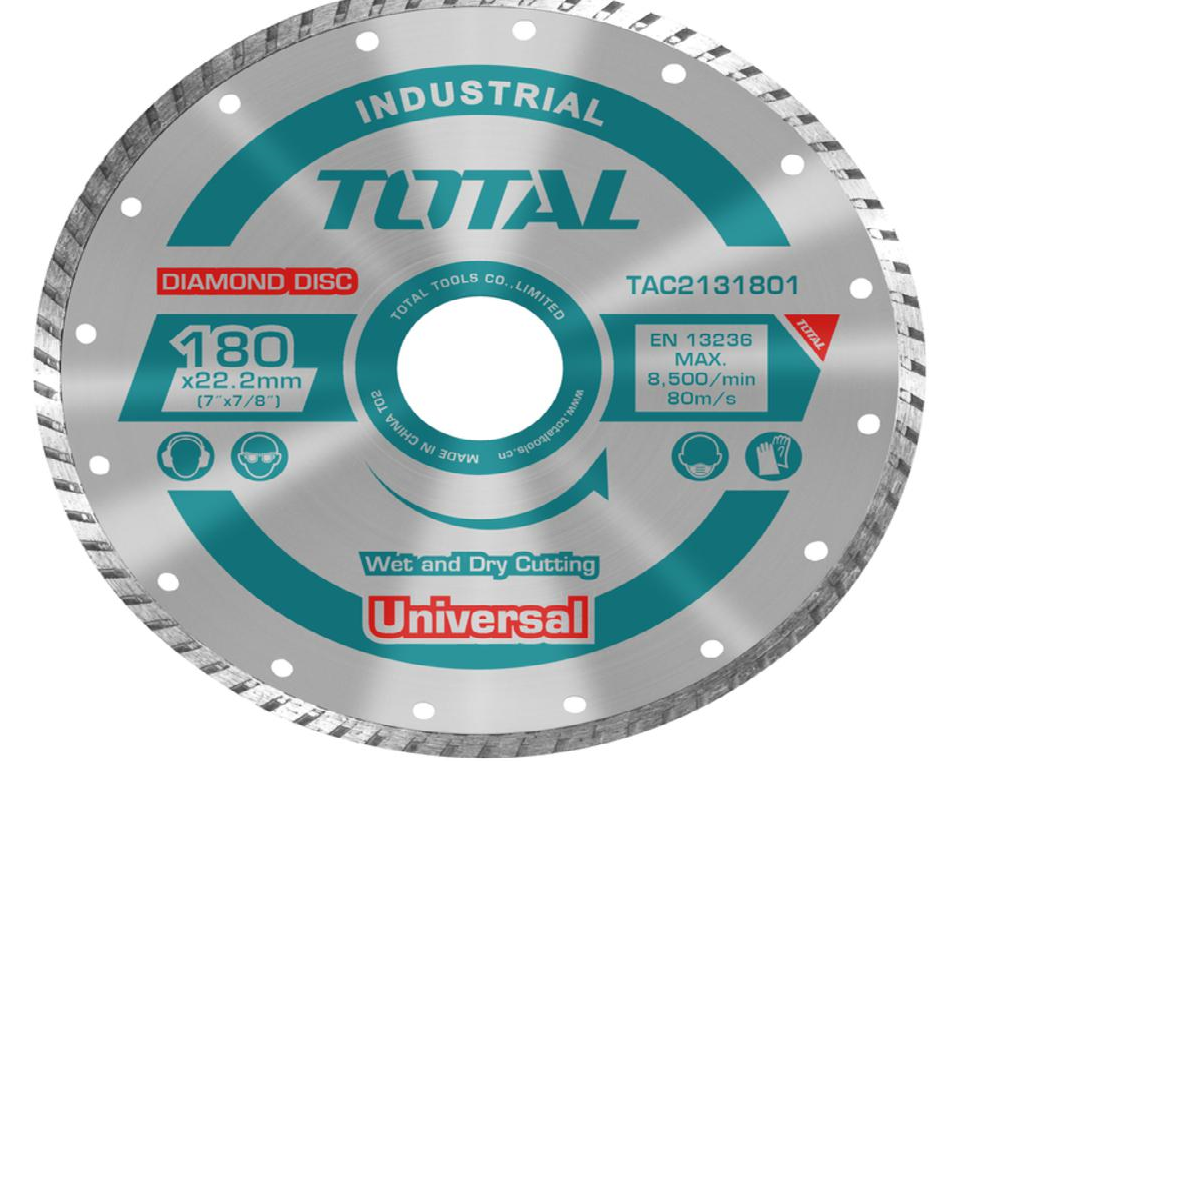 Total διαμαντοδίσκος universal turbo 180 Χ 22.2mm (TAC2131801)